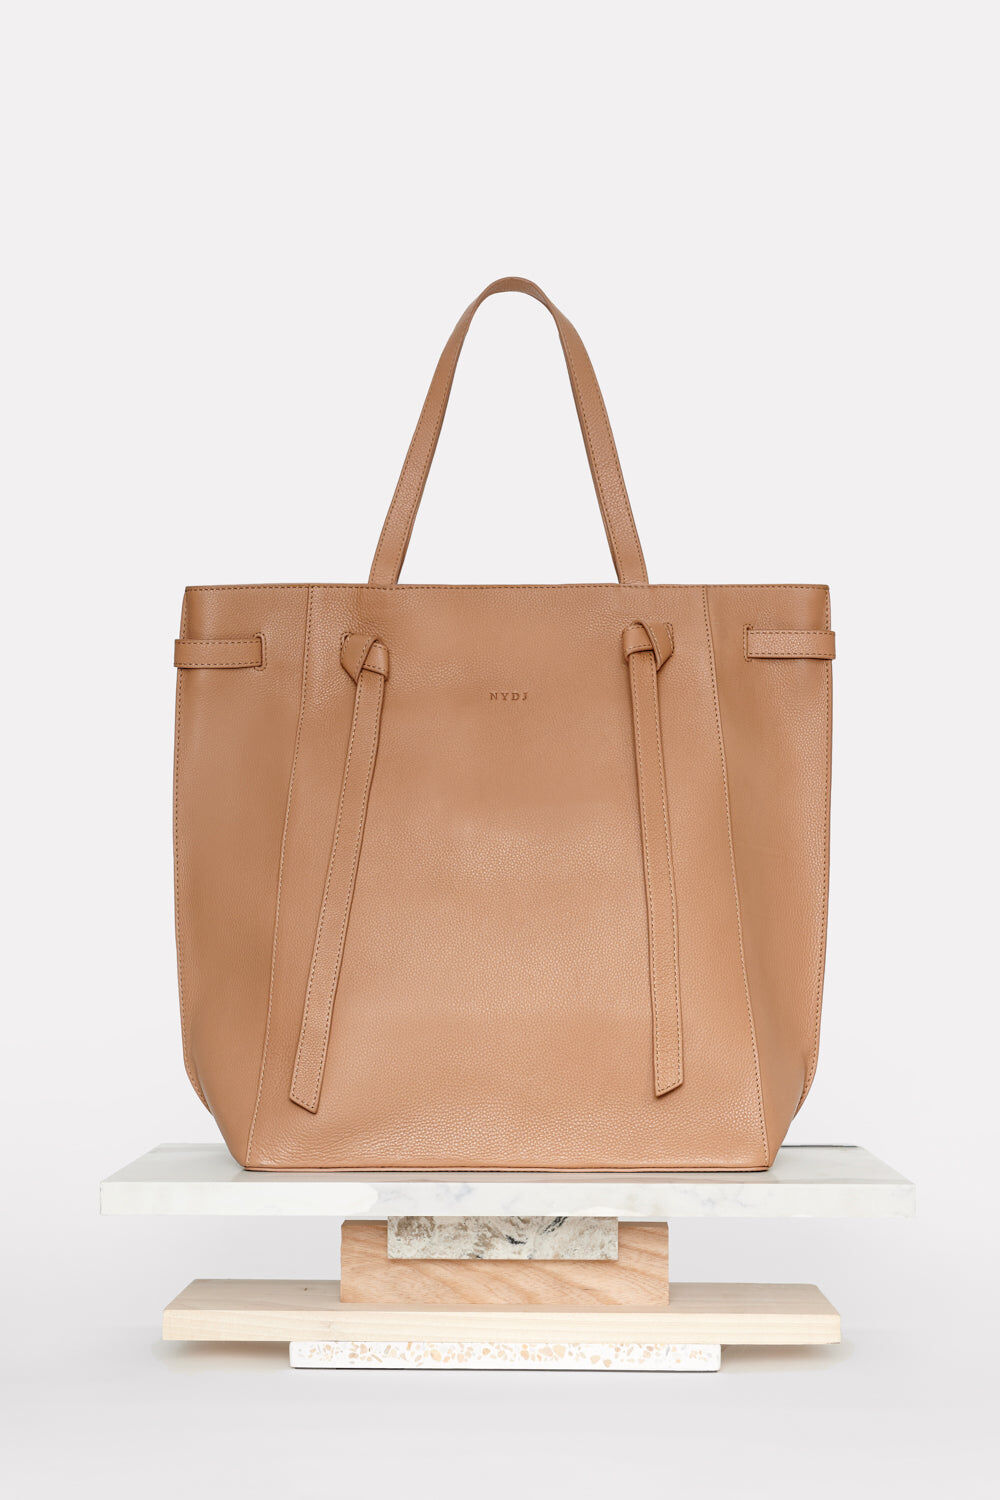 NYDJ Women's Large Tote Bag in Medium Brown, Regular   Leather